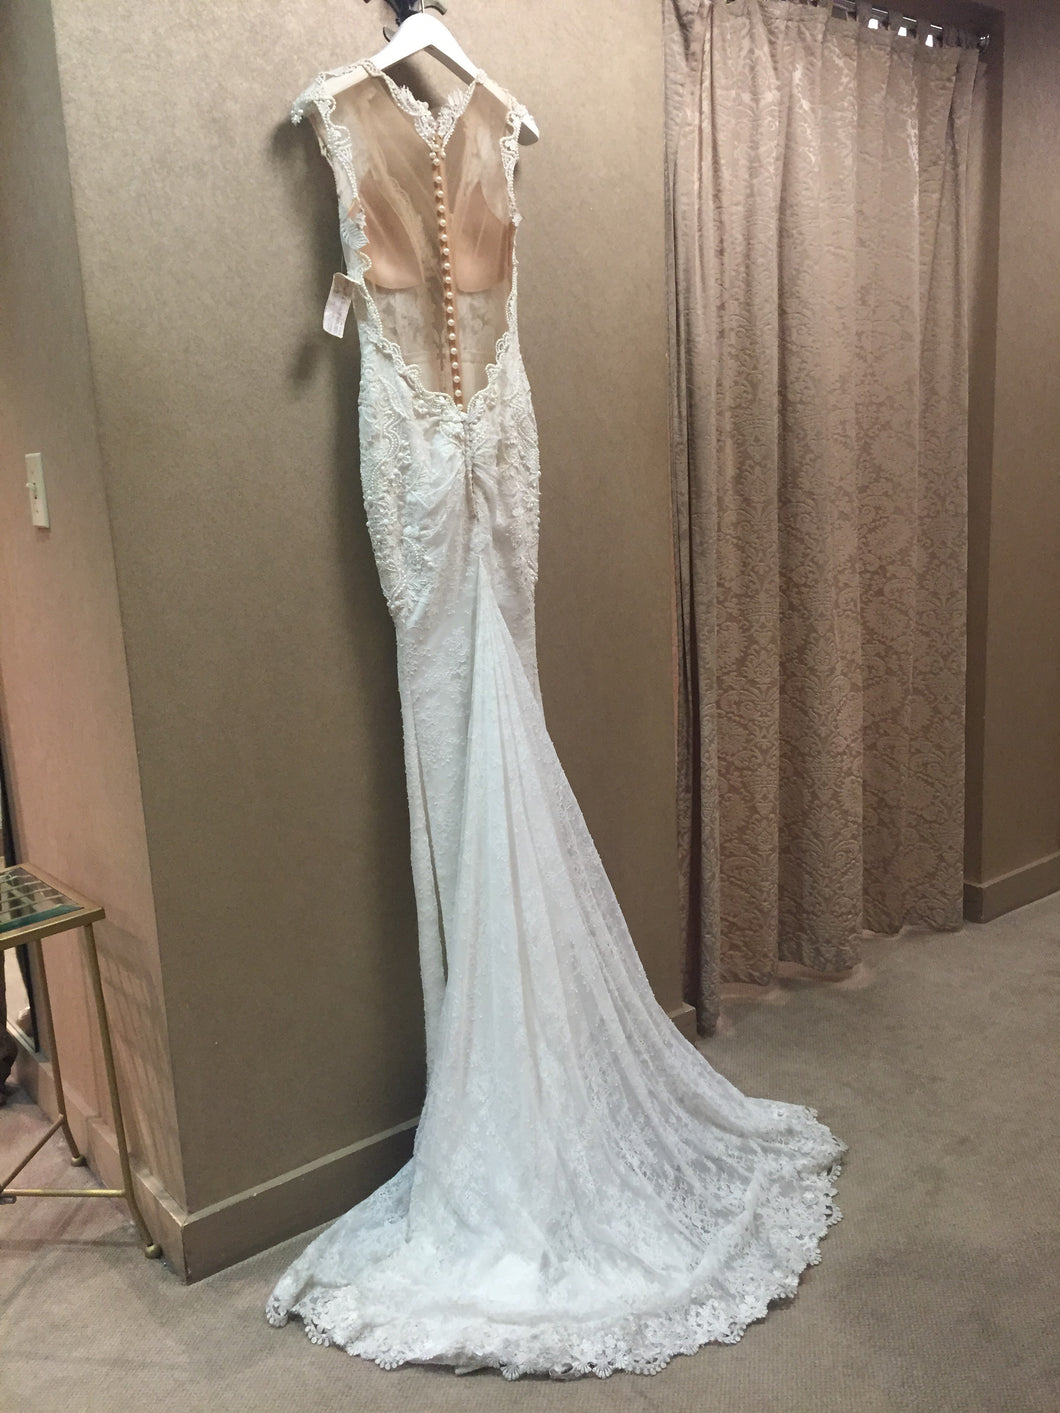 Berta '14-20' size 2 used wedding dress back view on hanger